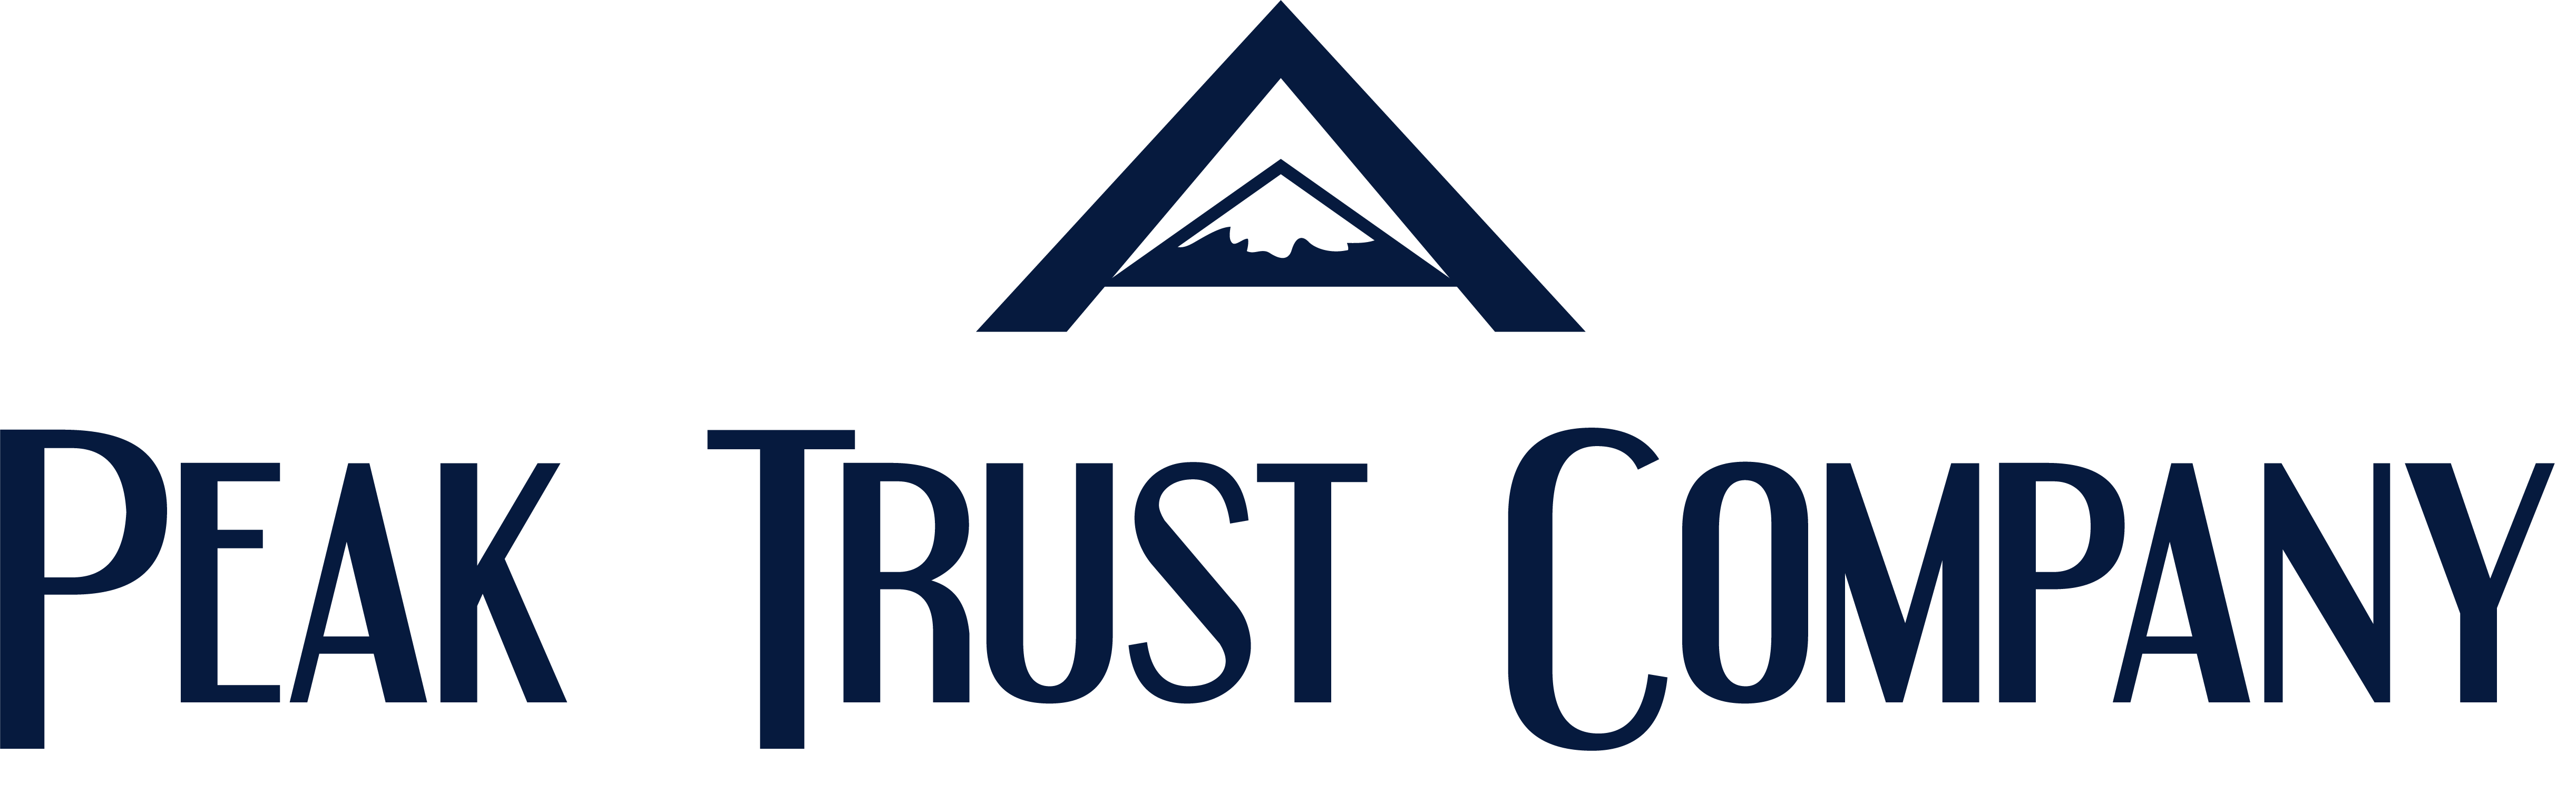 Peak Trust Company